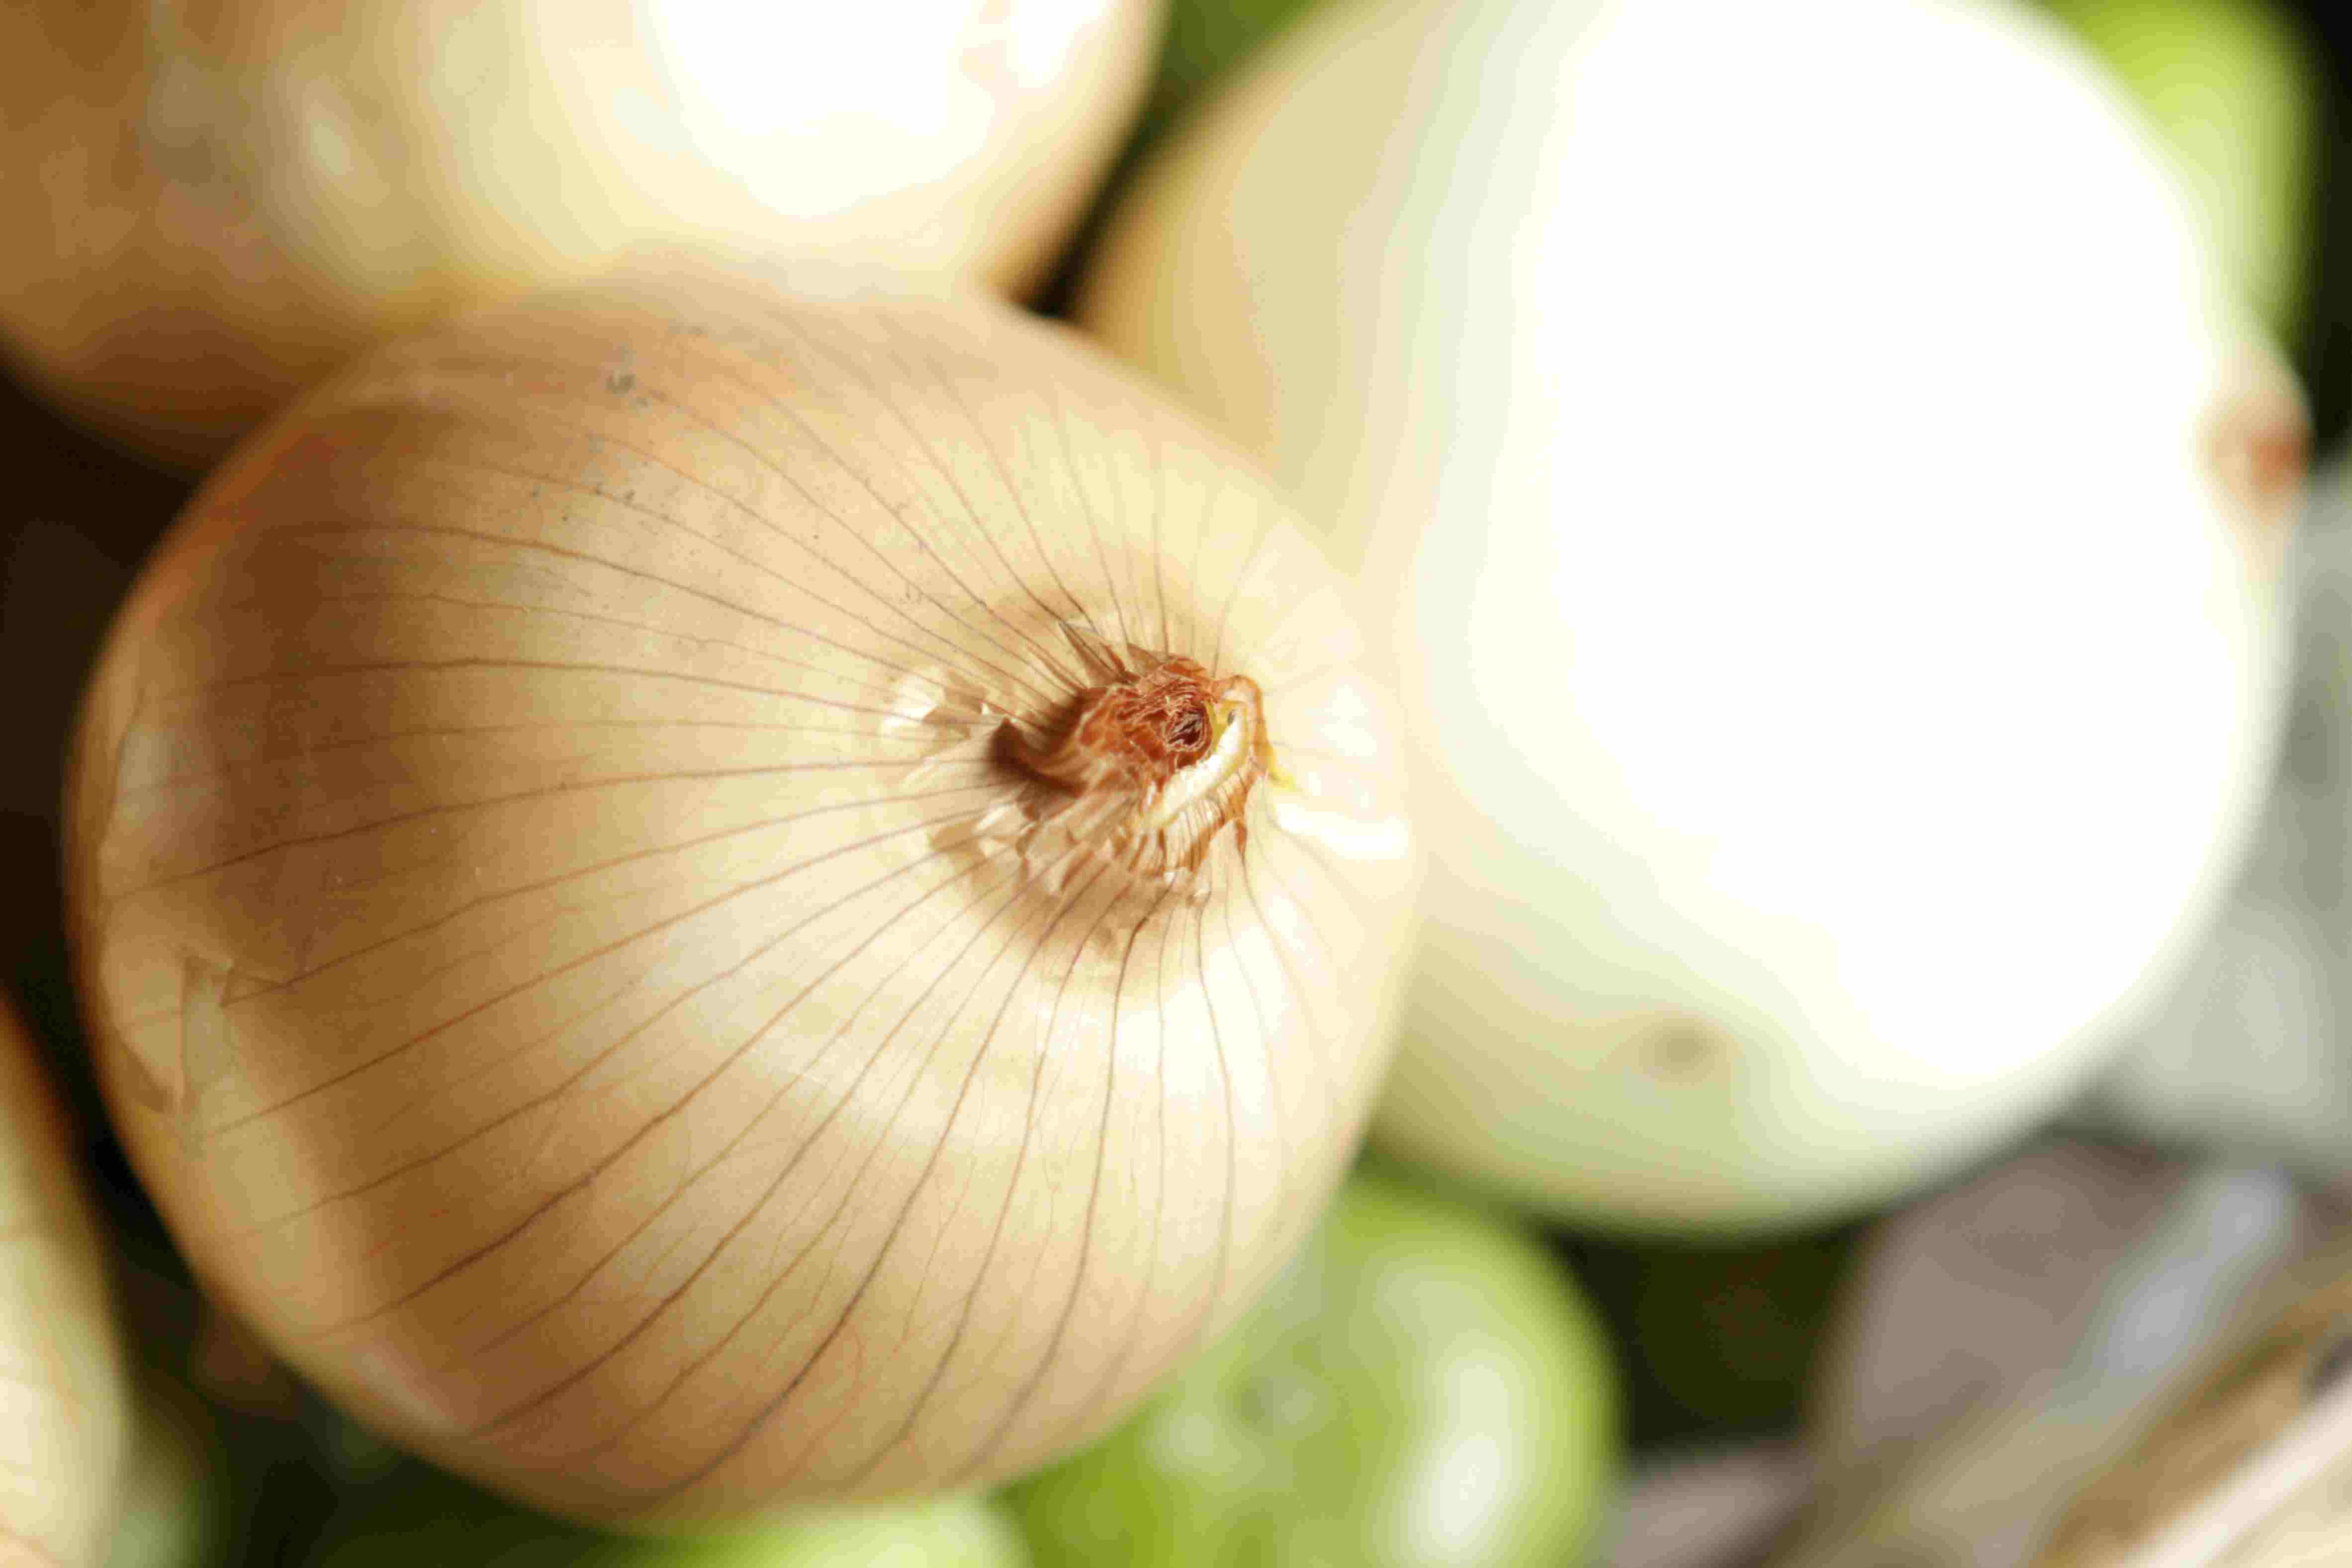 Description of: Onion